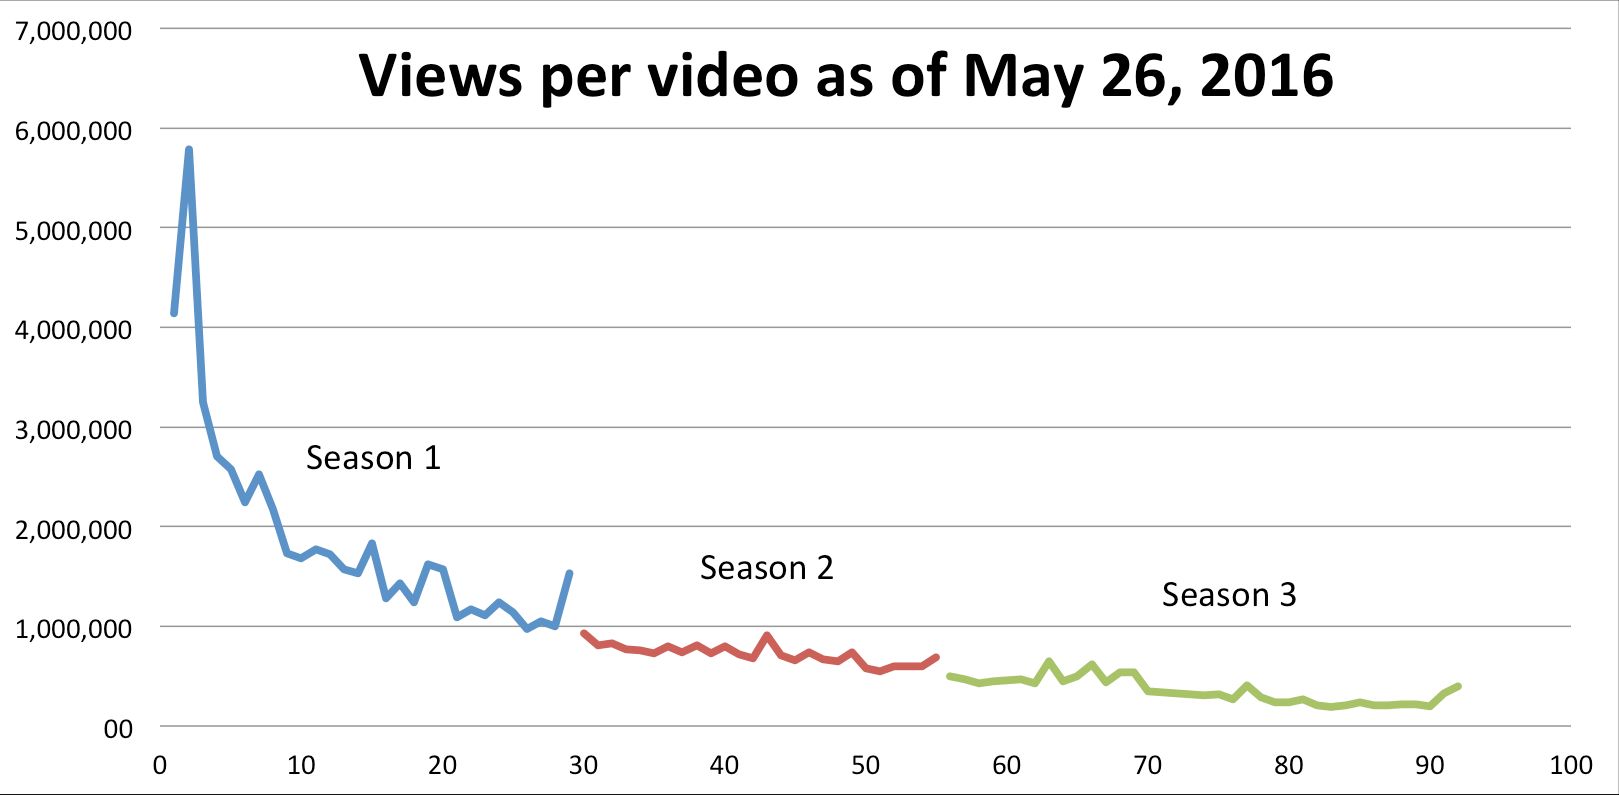 Views per video as of May 26, 2016